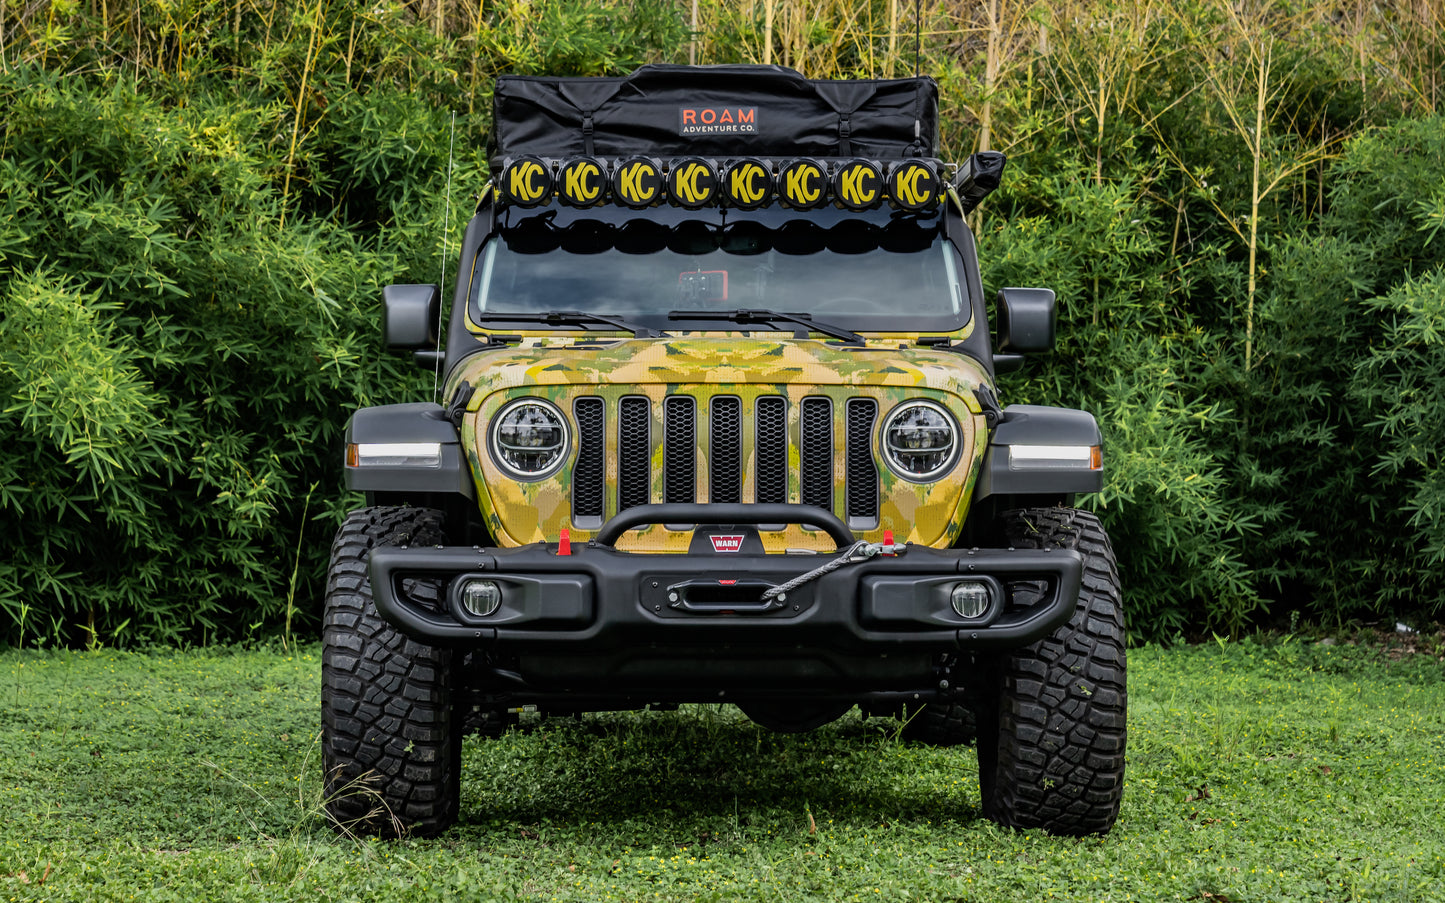 upgraded camo wrapped jeep wrangler rubicon for sale near shertz cibolo texas at hawkes outdoors 2102512882